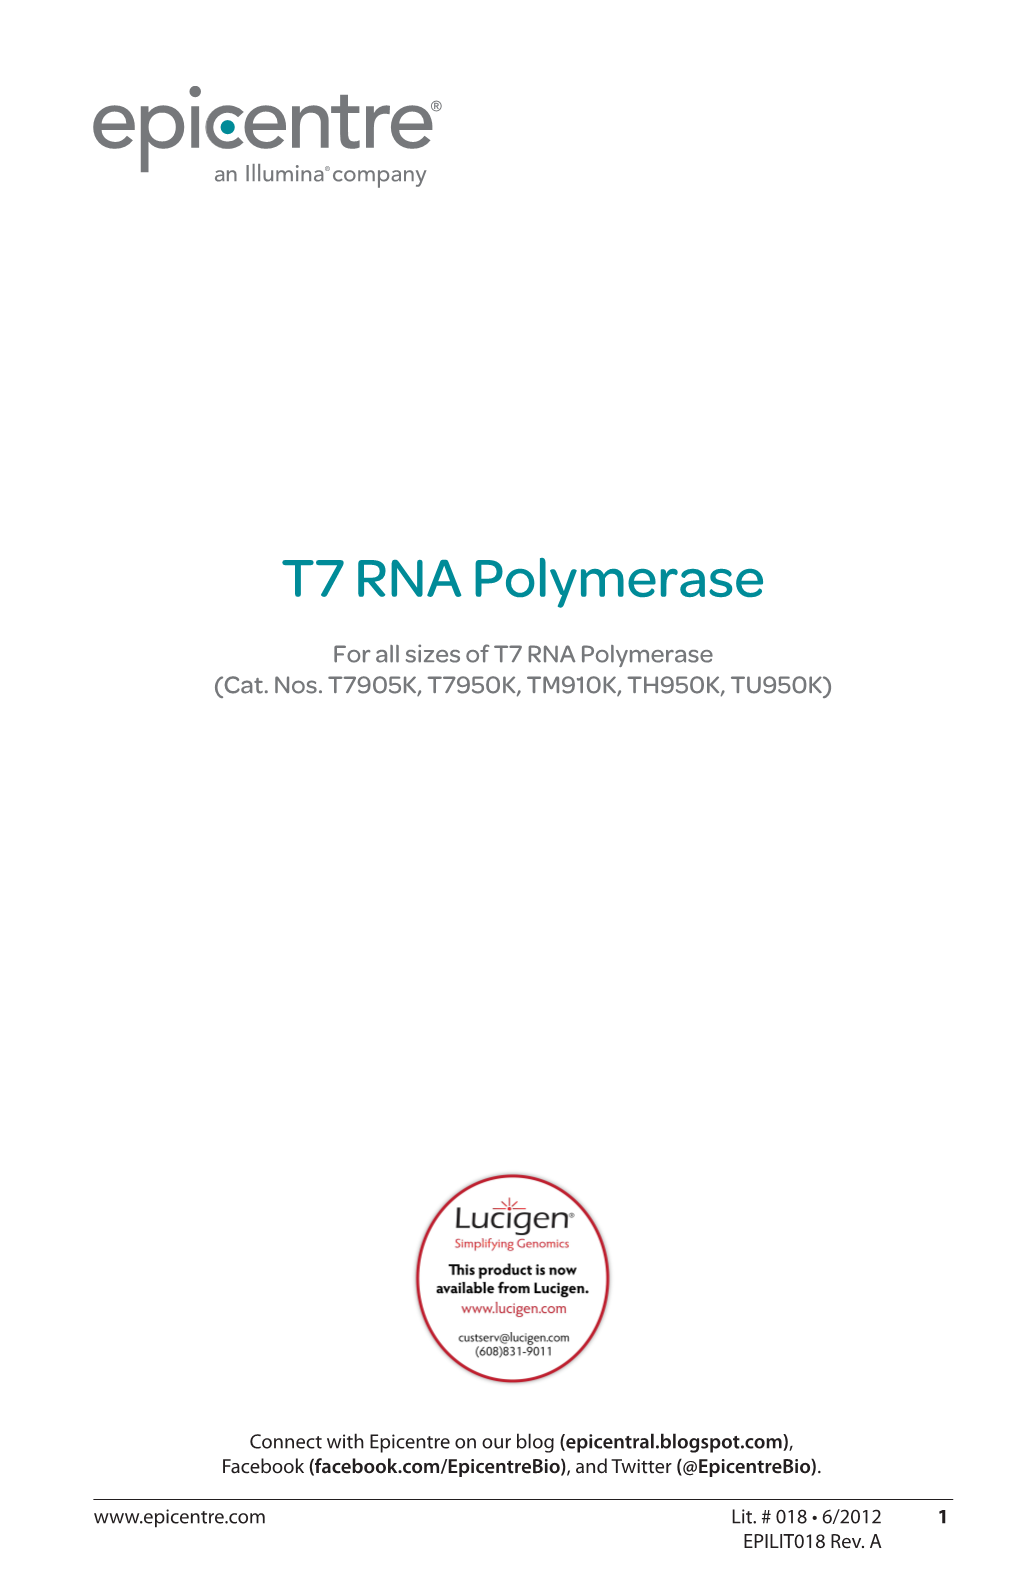 Protocol for T7 RNA Polymerase